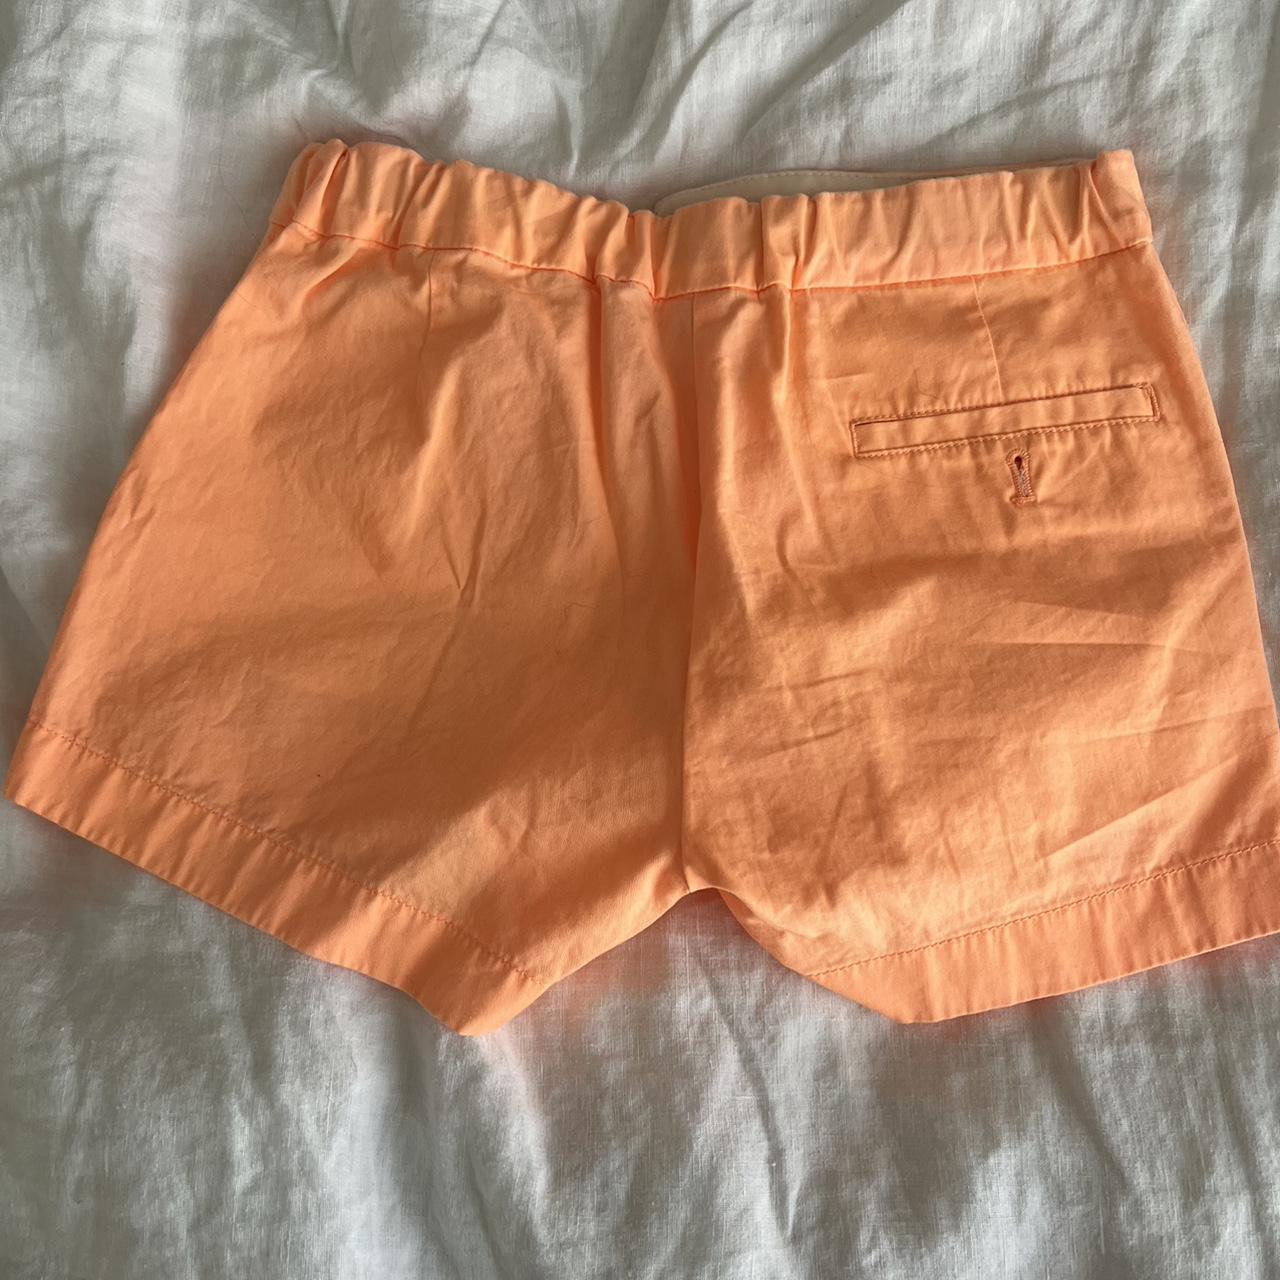 Crewcuts by J.Crew Orange Shorts (3)